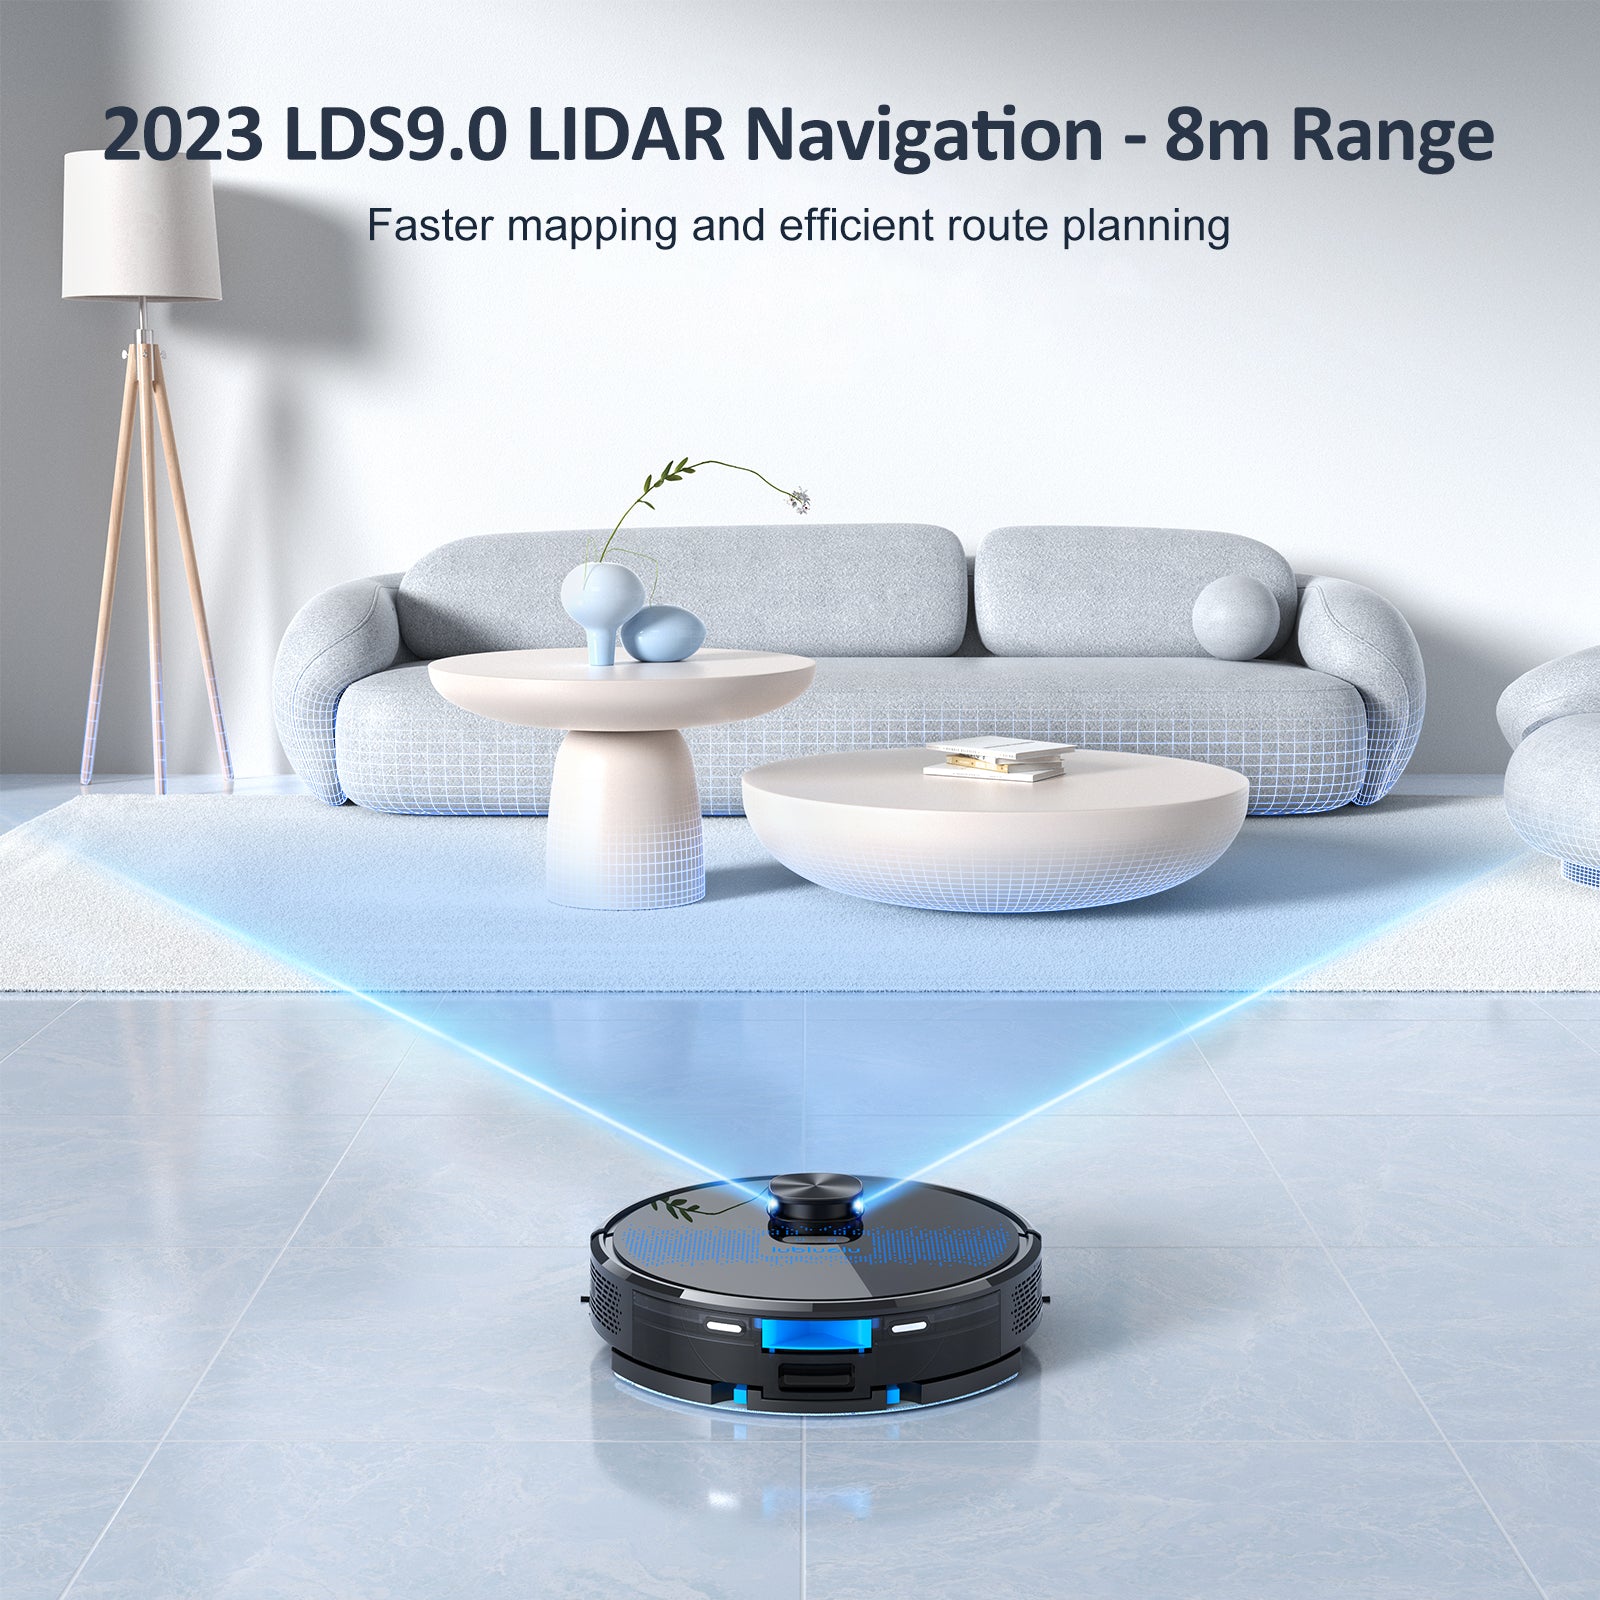 Lubluelu SL61 - LDS9.0 Lidar Navigation Plusieurs modes de